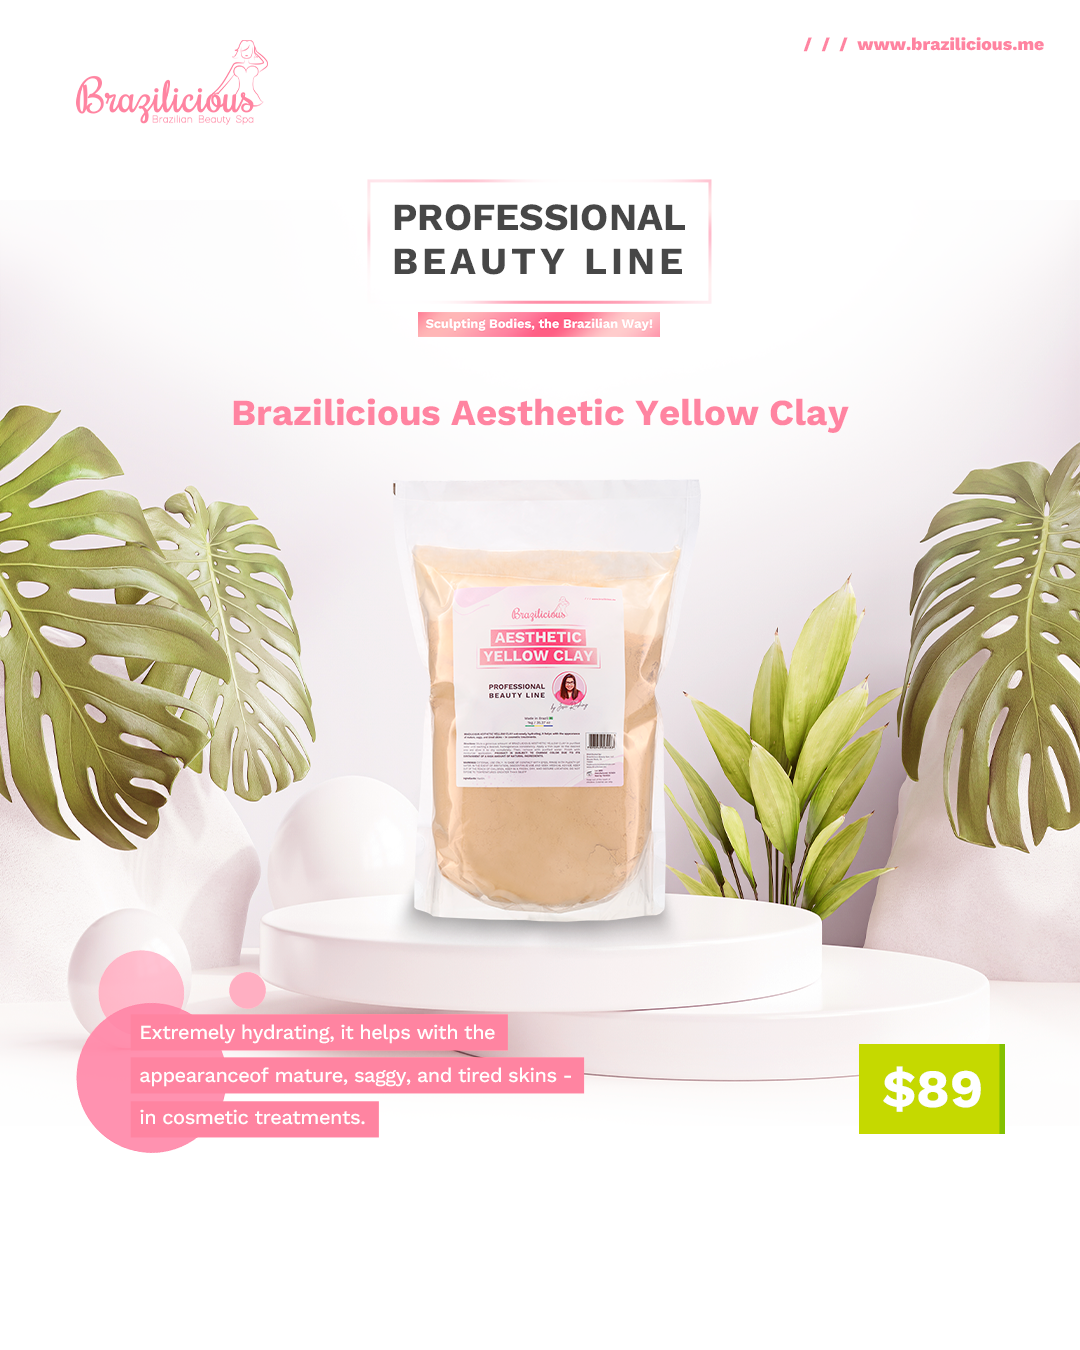 Brazilicious Aesthetic Yellow Clay